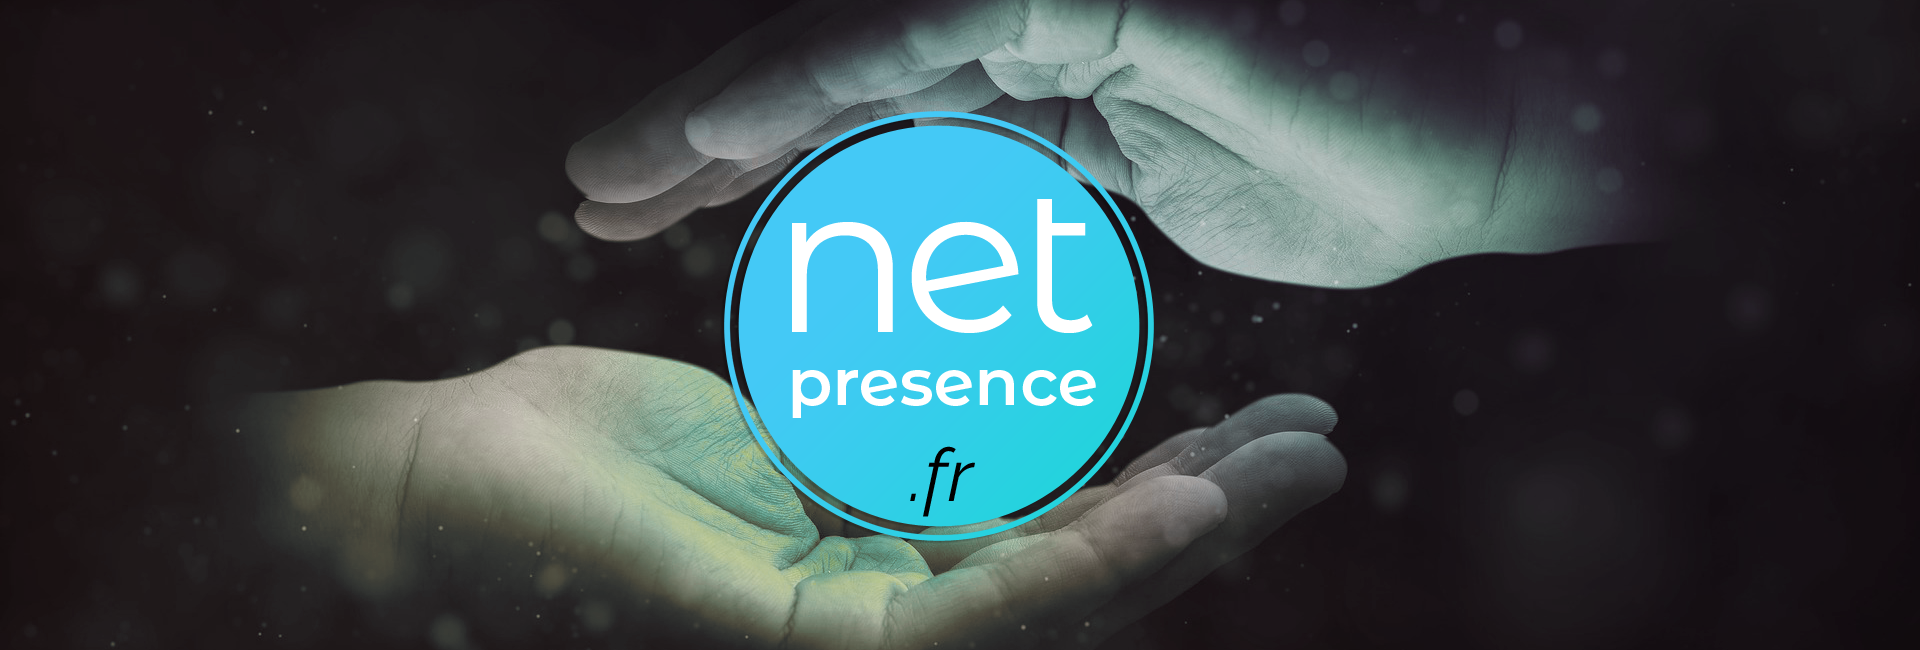 netpresence